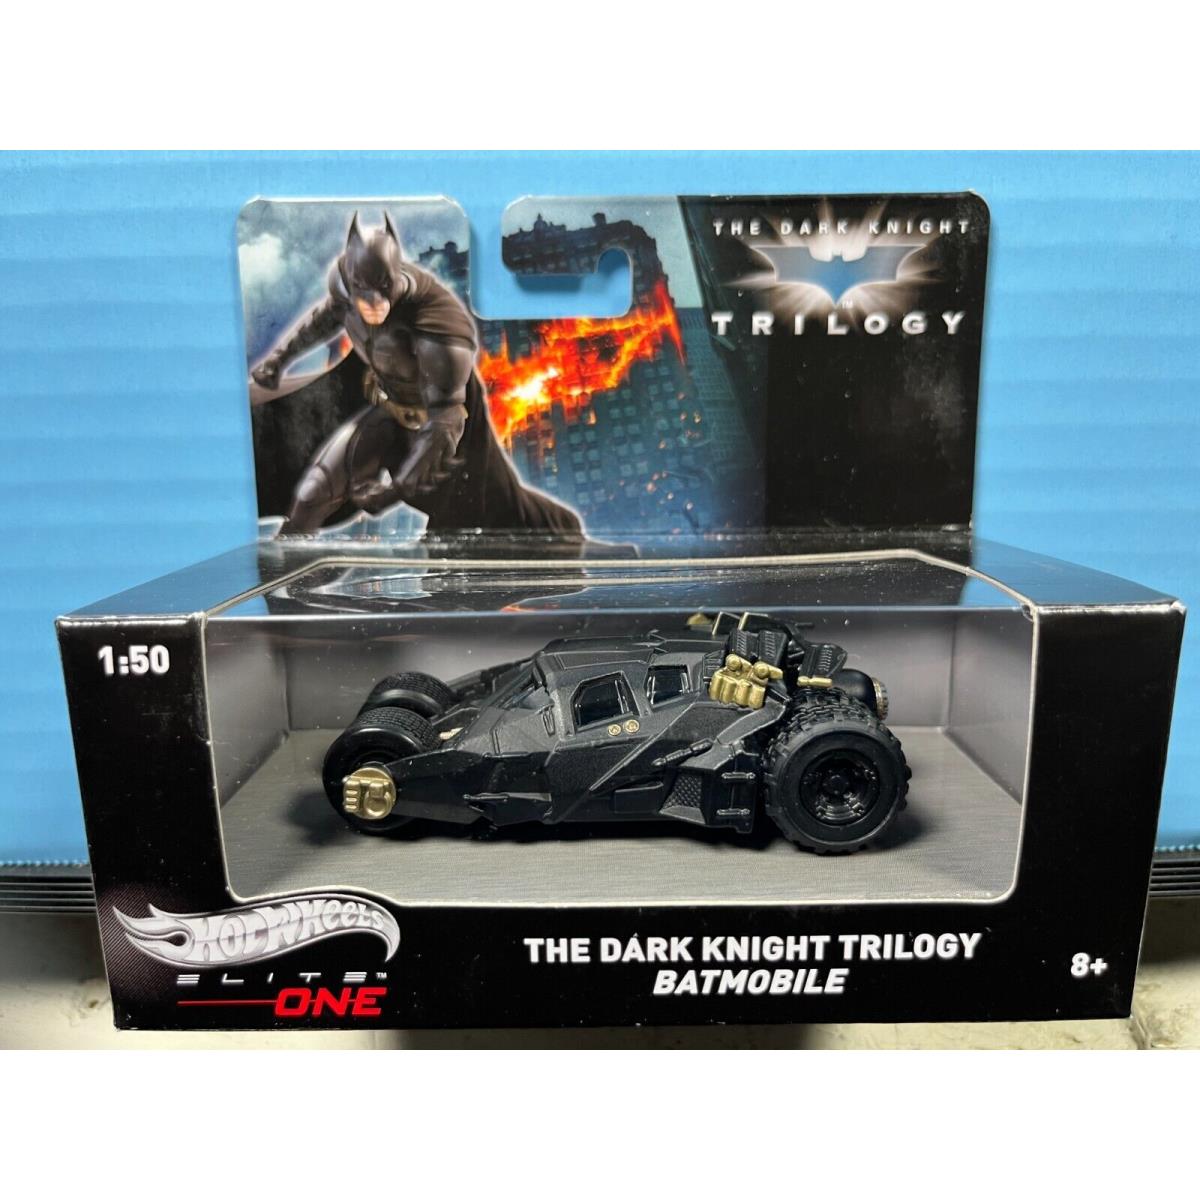 1/50 Hot Wheels Elite One Batmobile From Batman The Dark Knight Trilogy Black